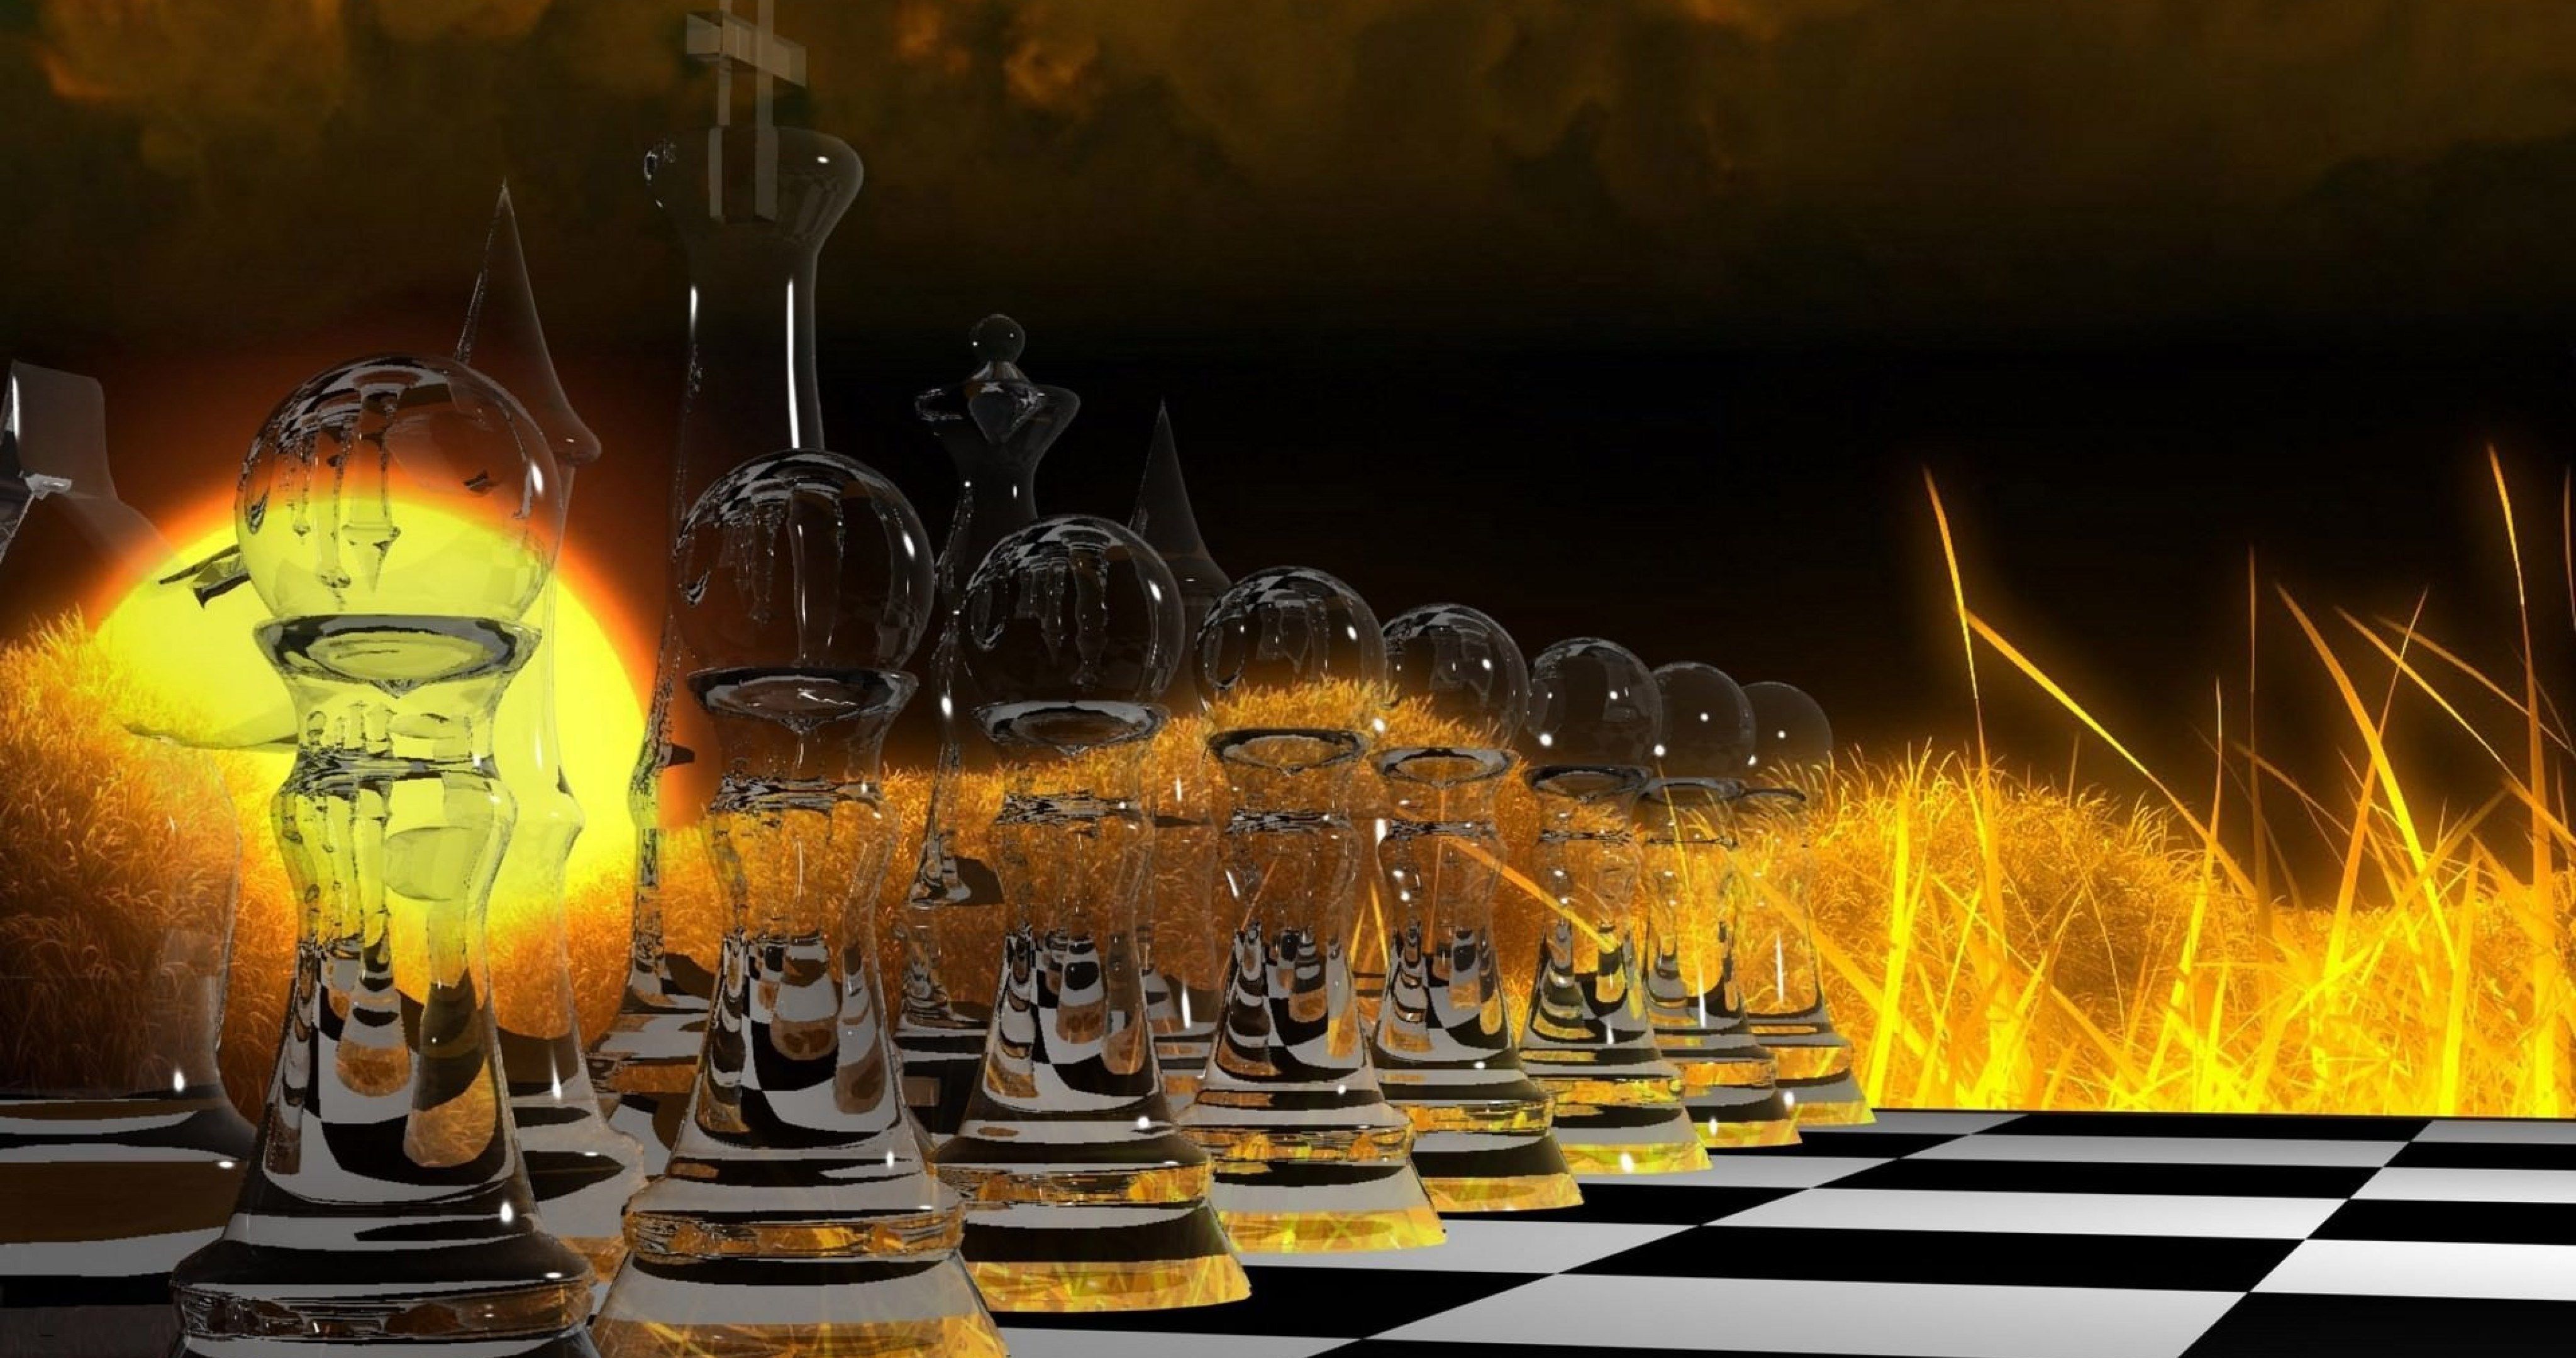 Download wallpaper 3840x2400 chess, chessboard, figures, 3d 4k ultra hd  16:10 hd background